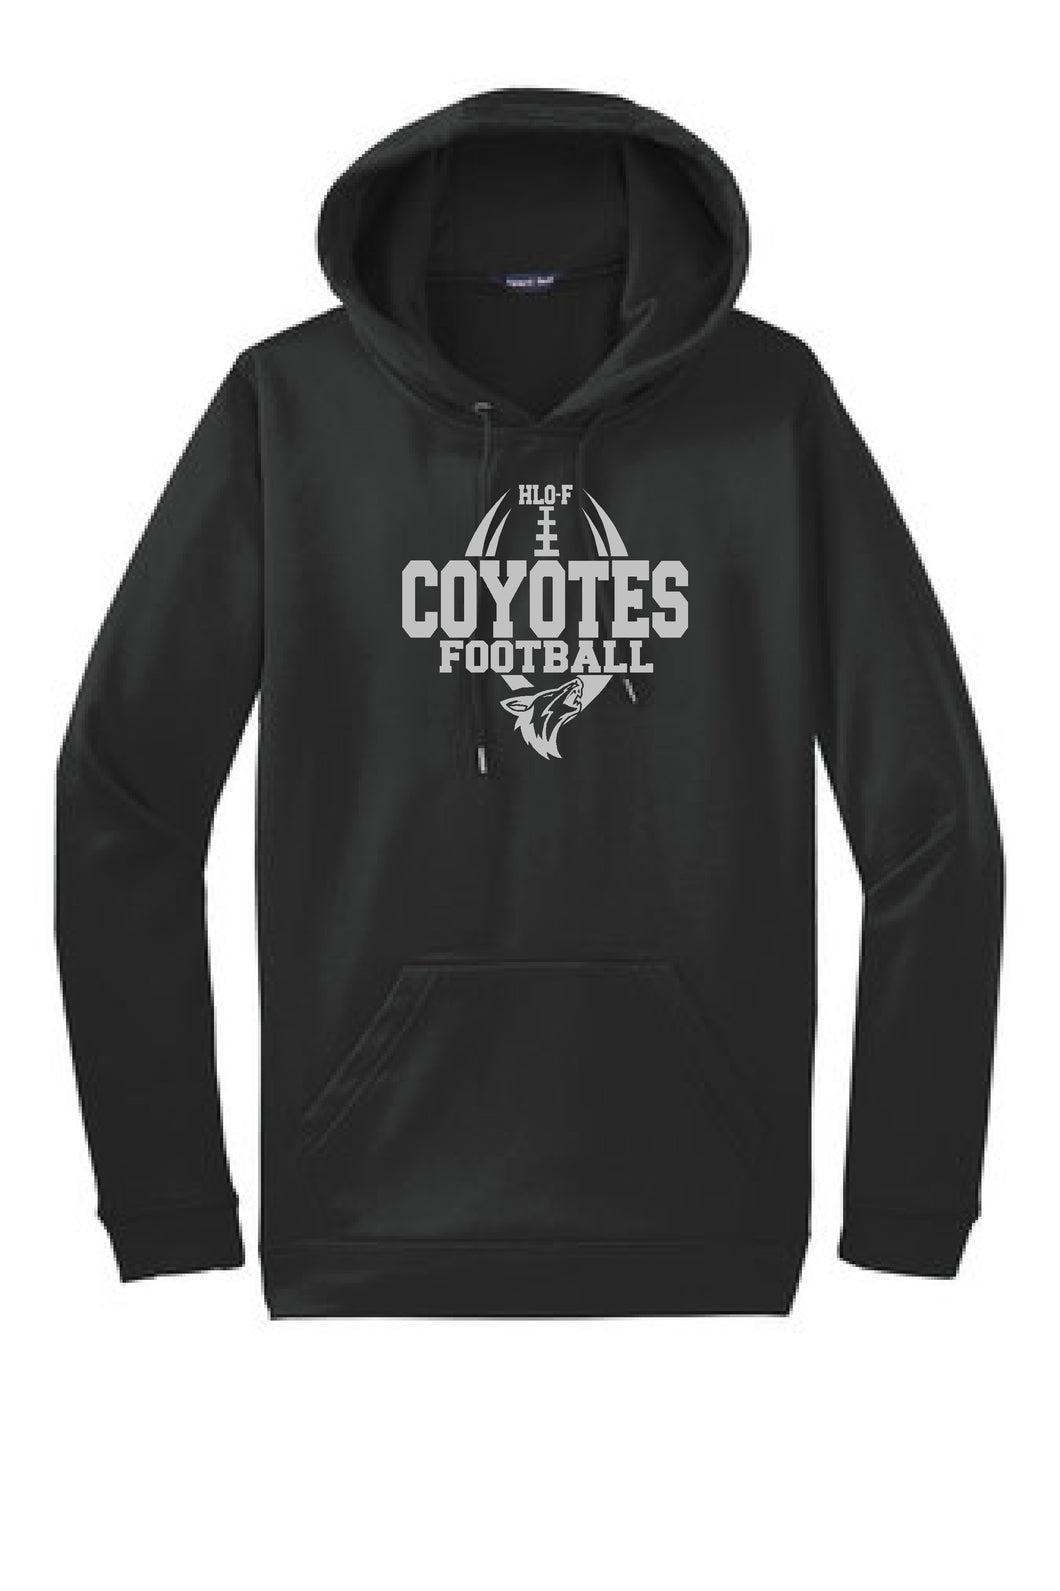 HLO-F Coyotes Youth Football Sport Tek Sweatshirt 2022